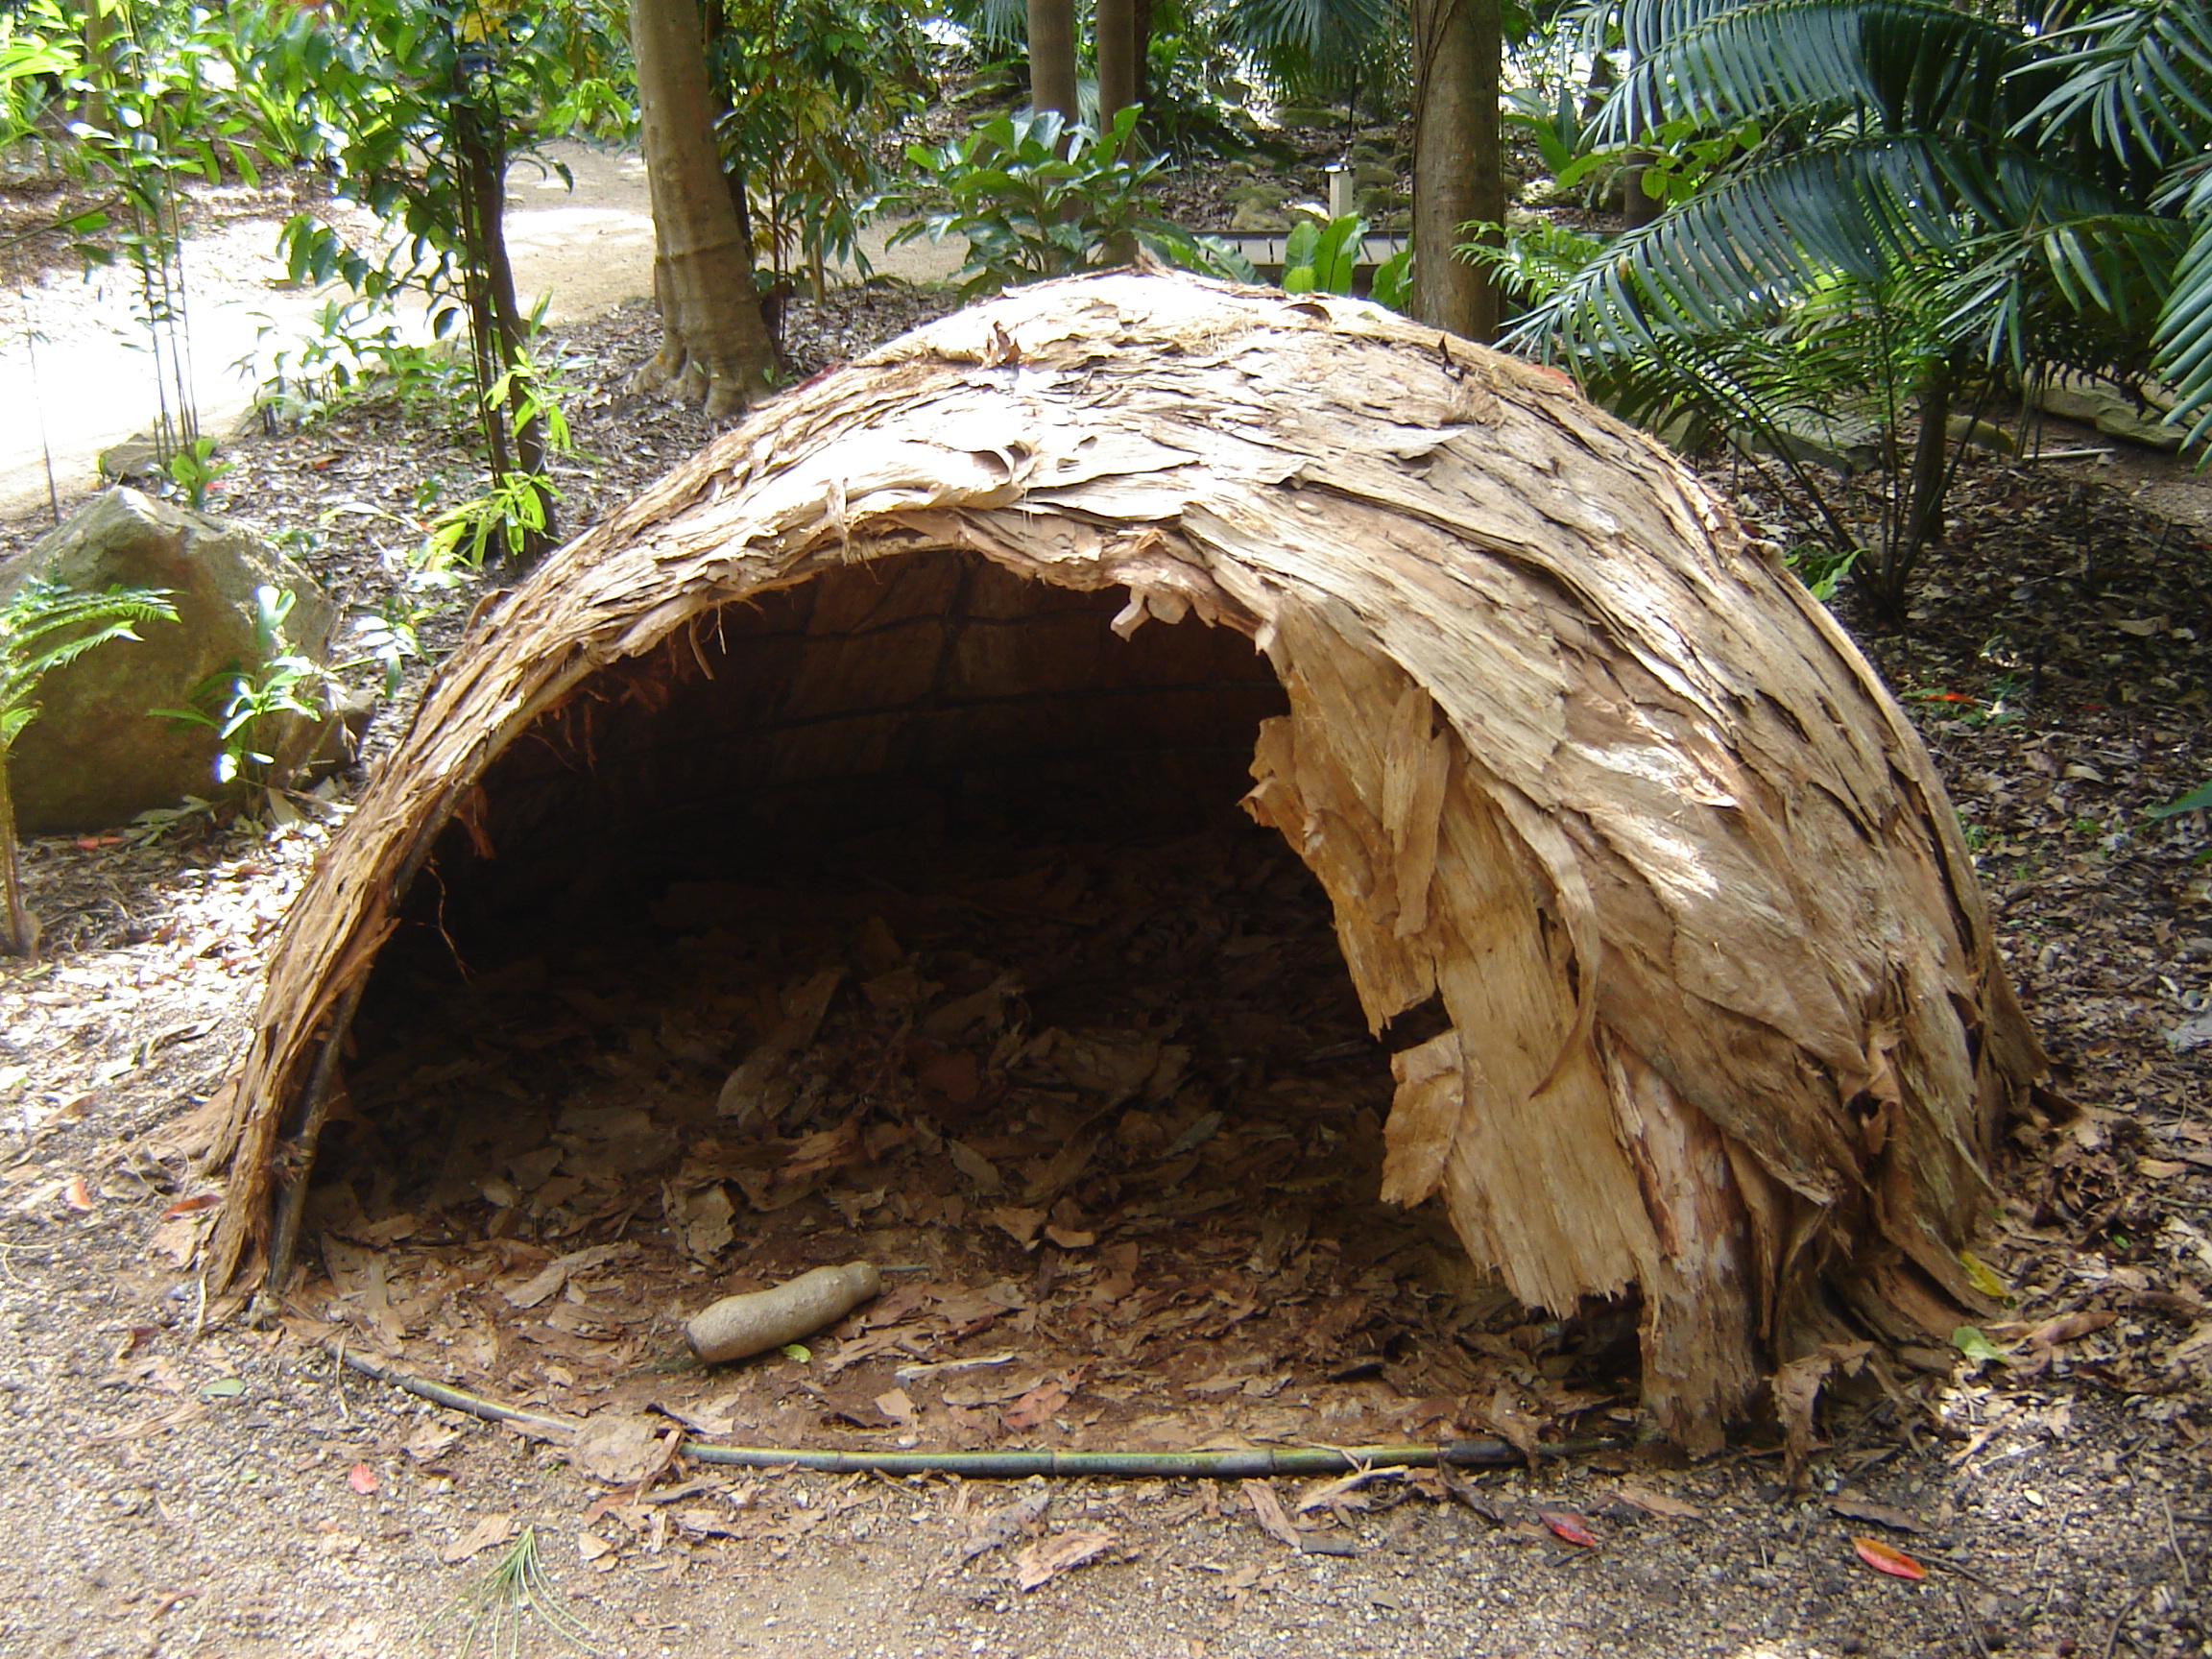 File:Hut-rainforest.JPG - Wikipedia